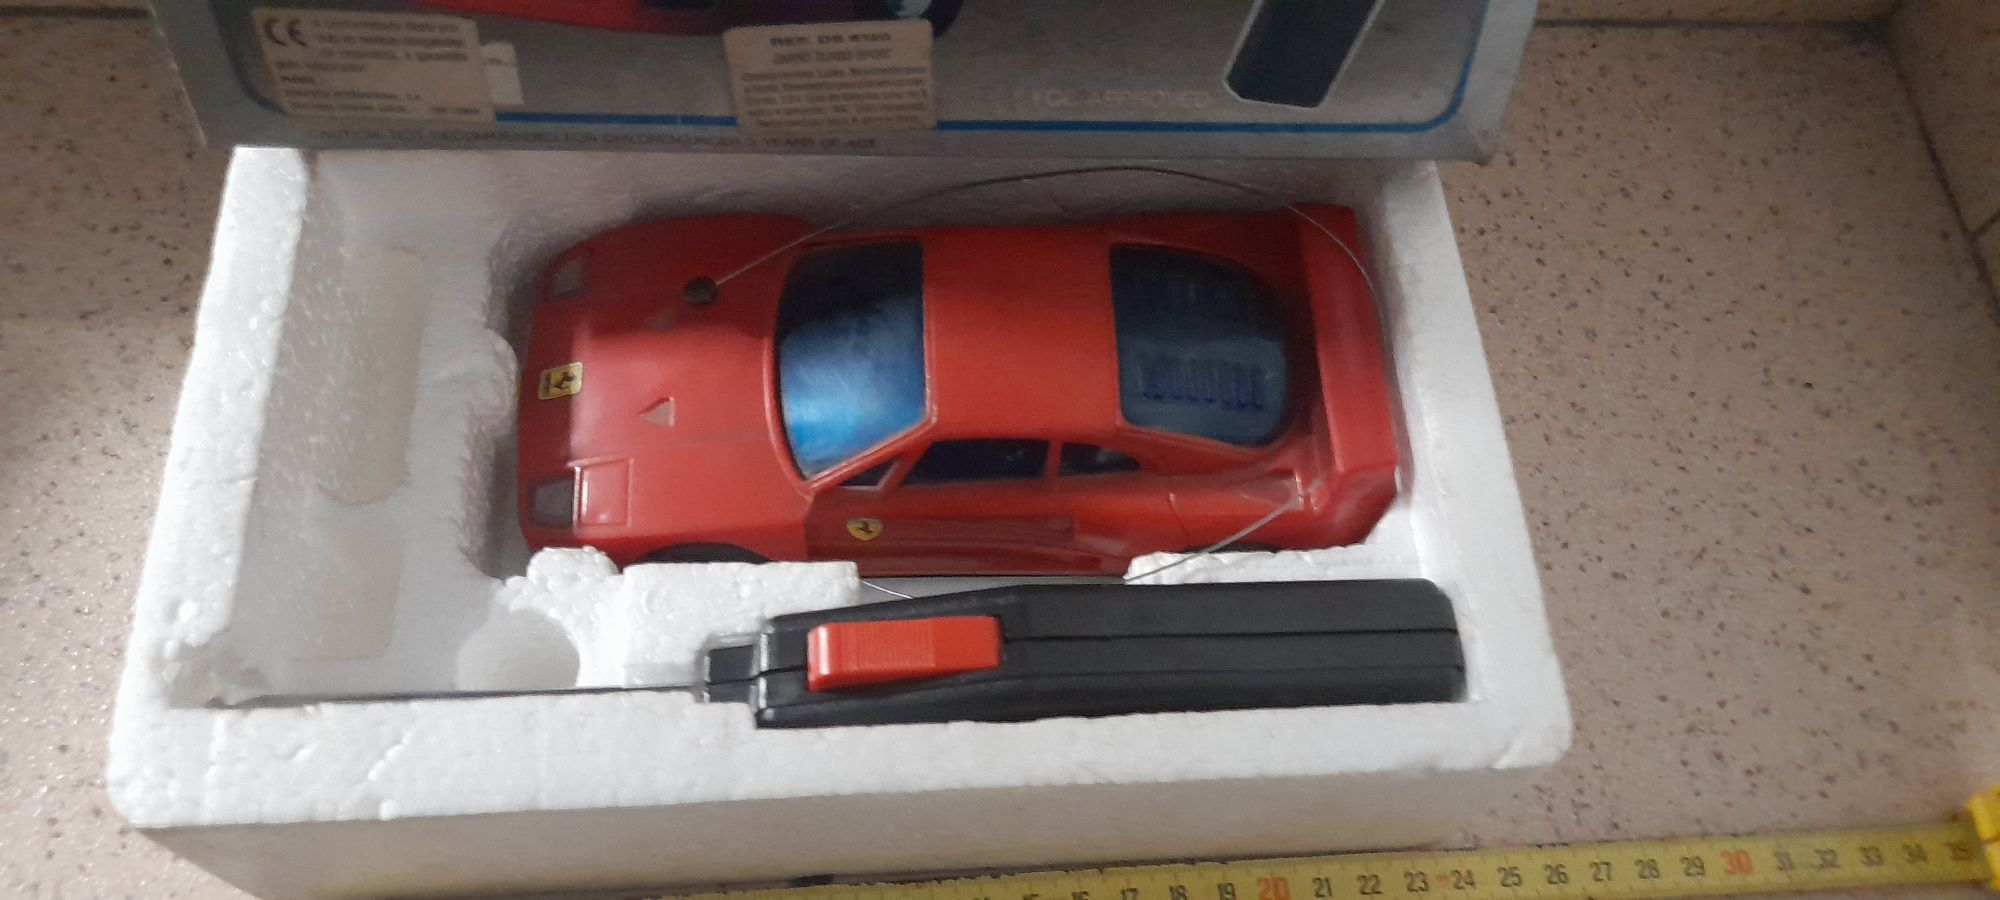 Ferrari telecomandado